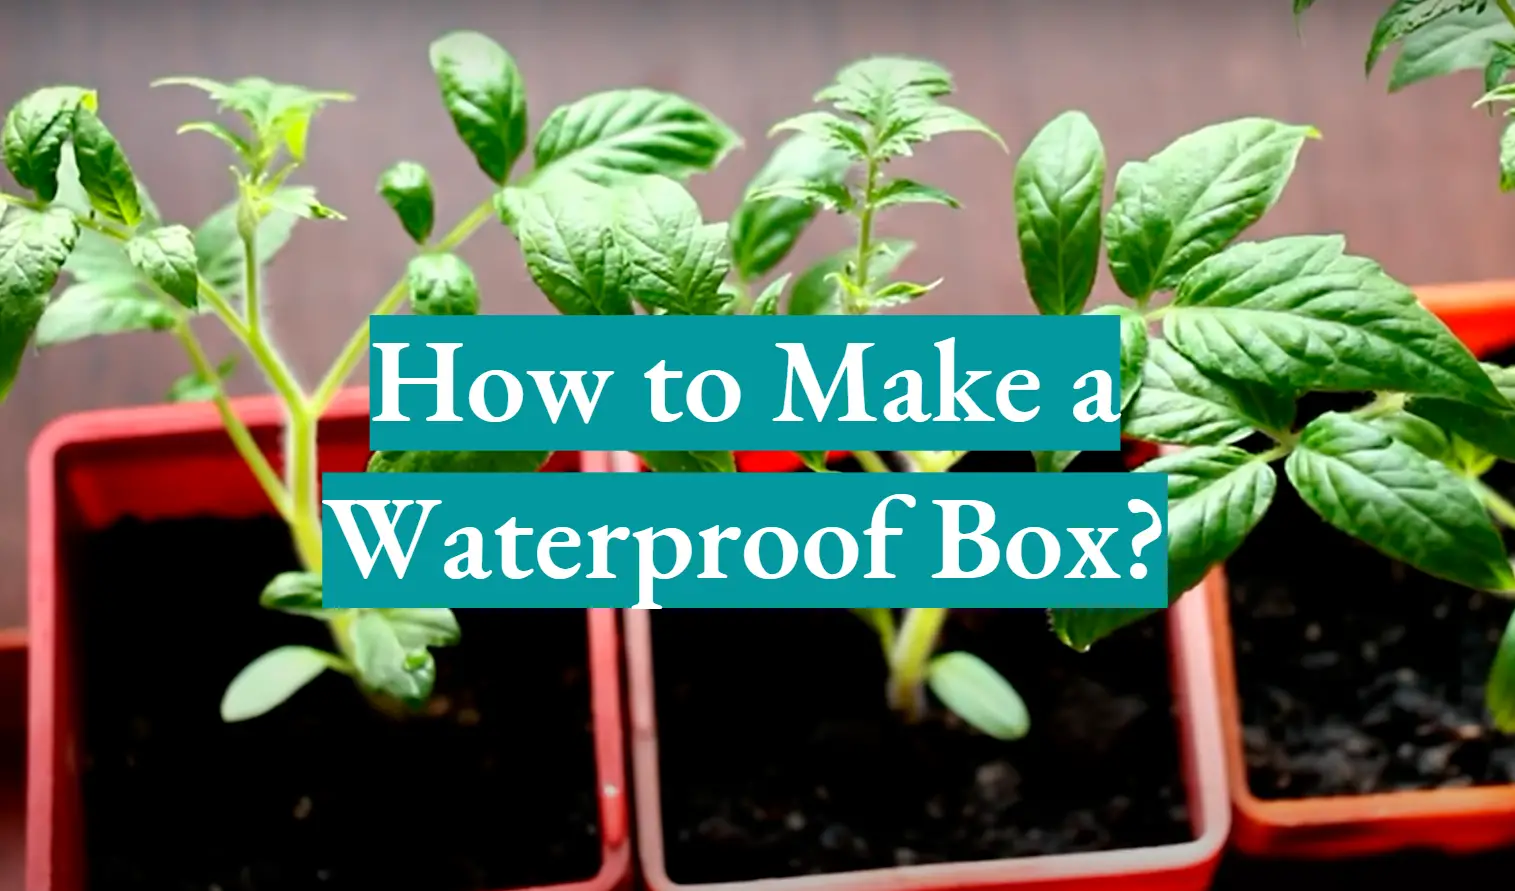 How to Make a Waterproof Box?